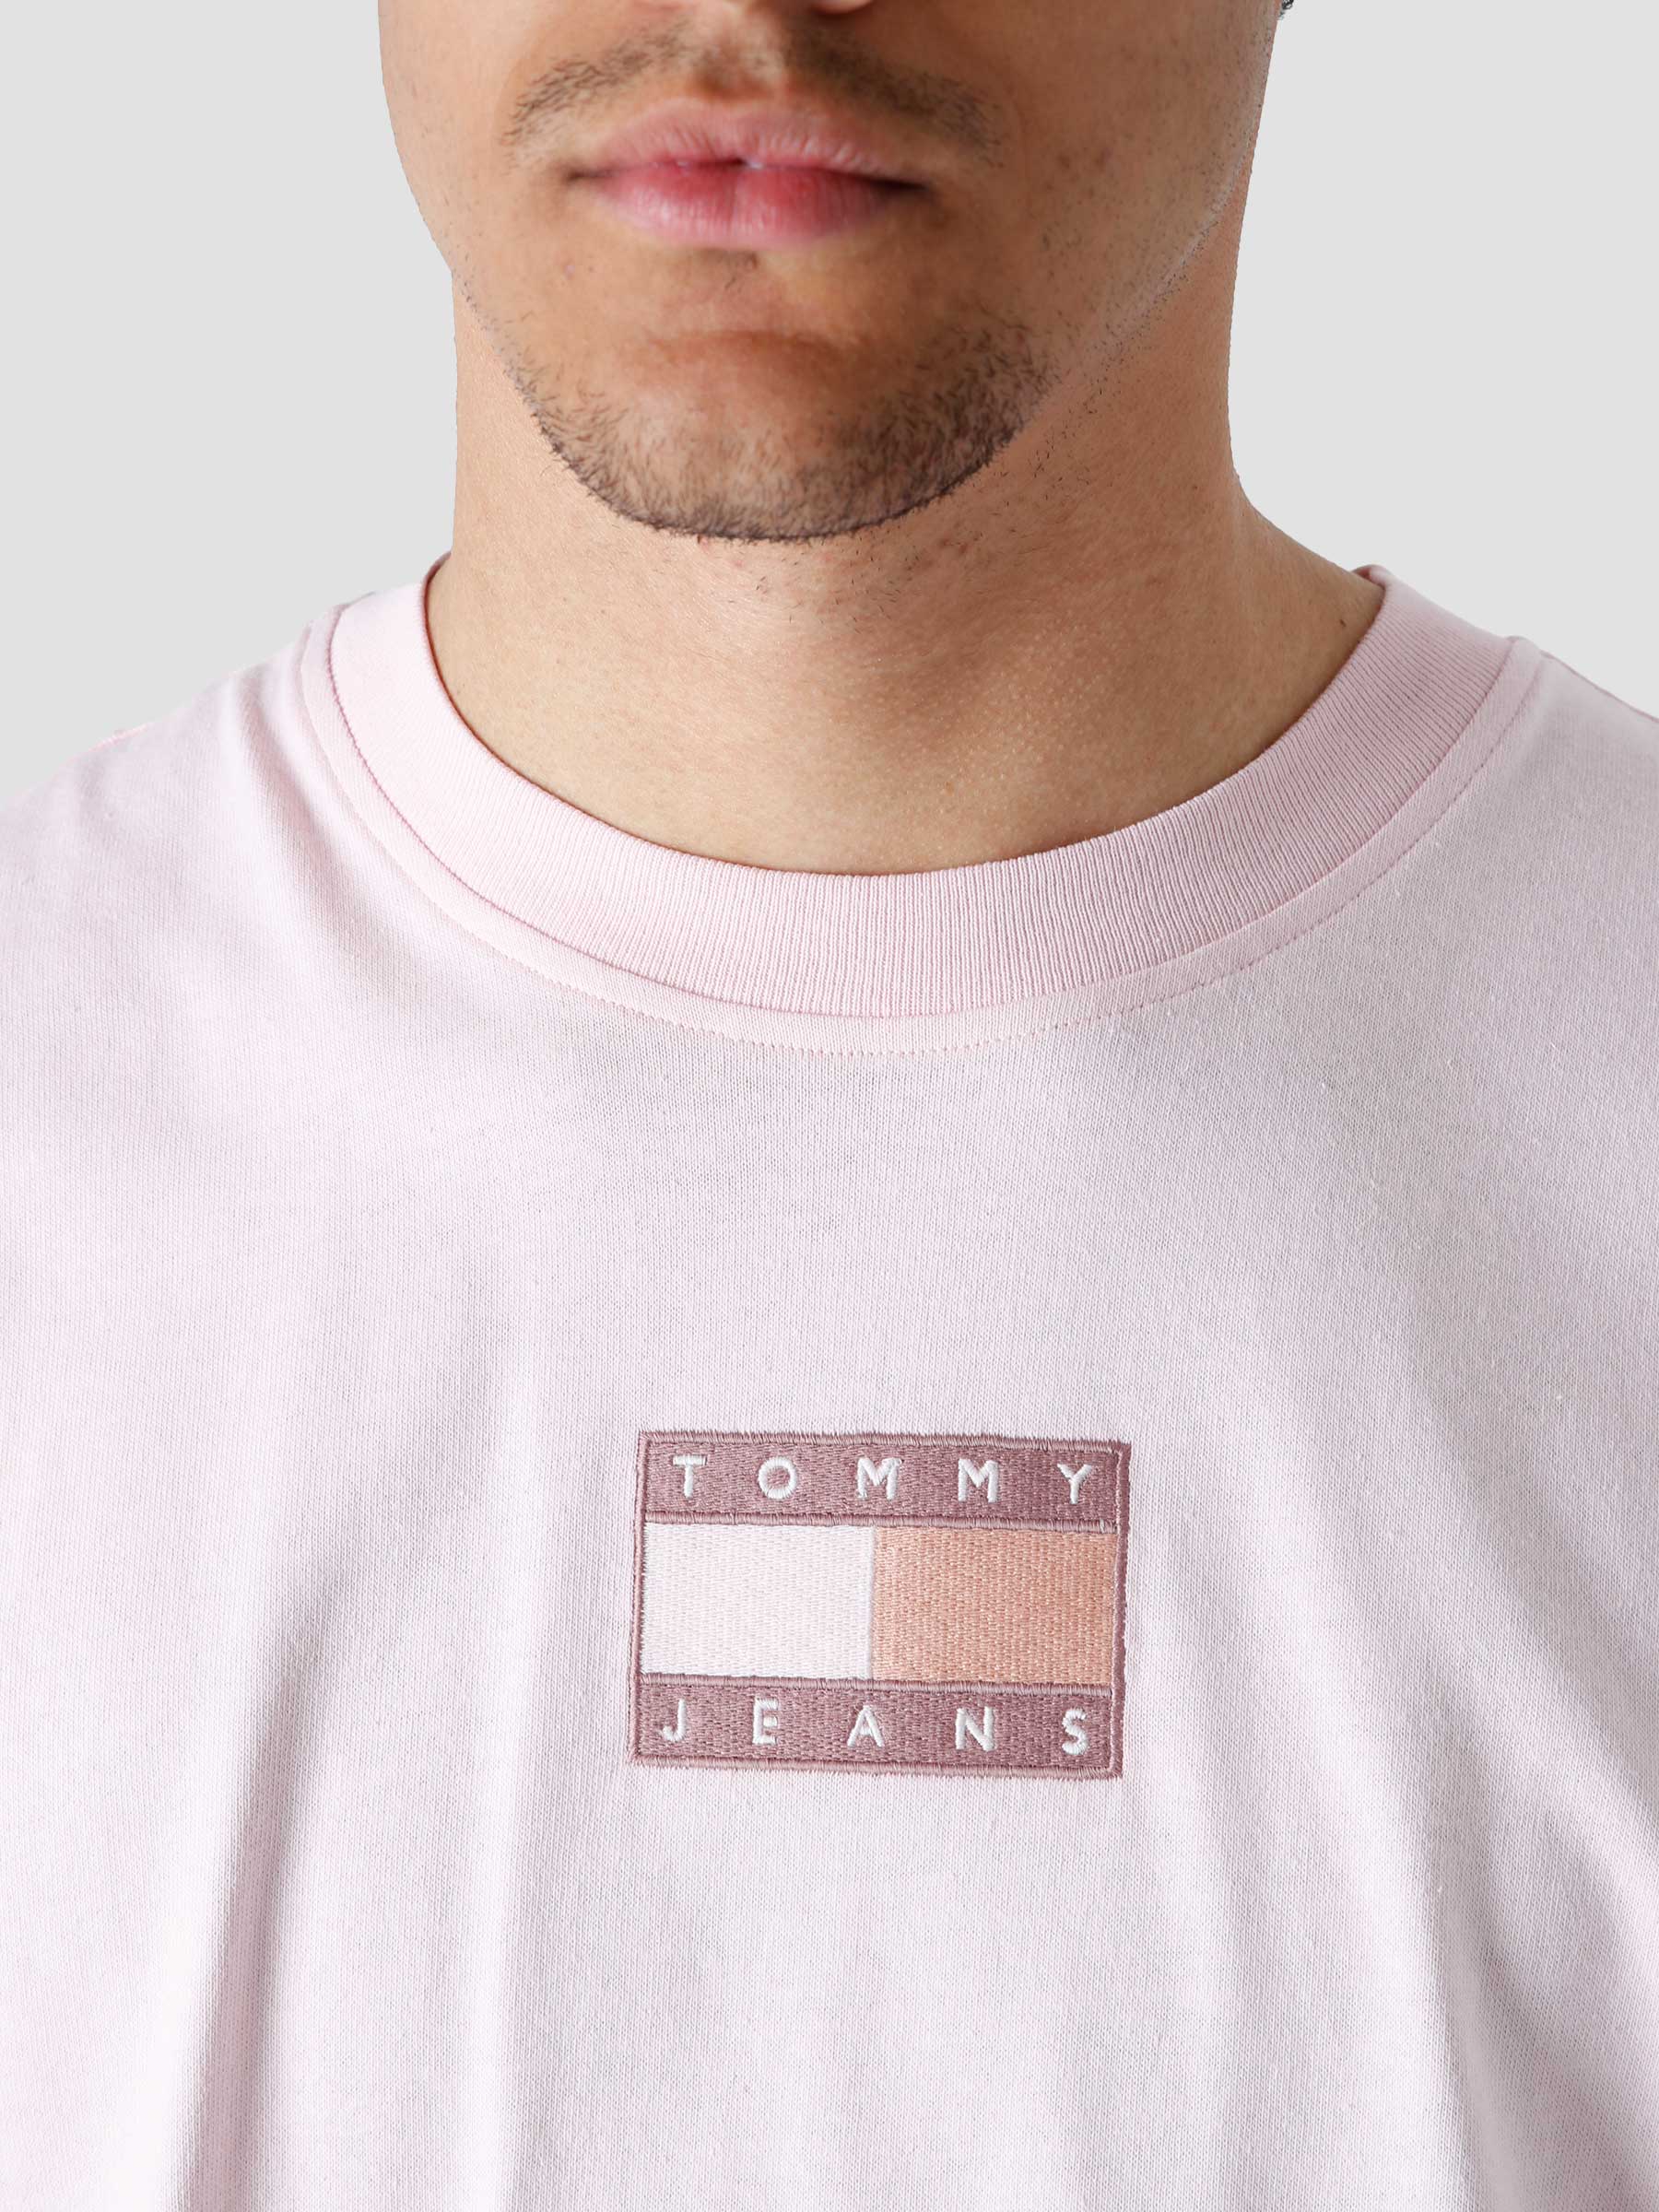 Tommy Jeans TJM Best T-Shirt Freshcotton Broadway Graphic - Pink